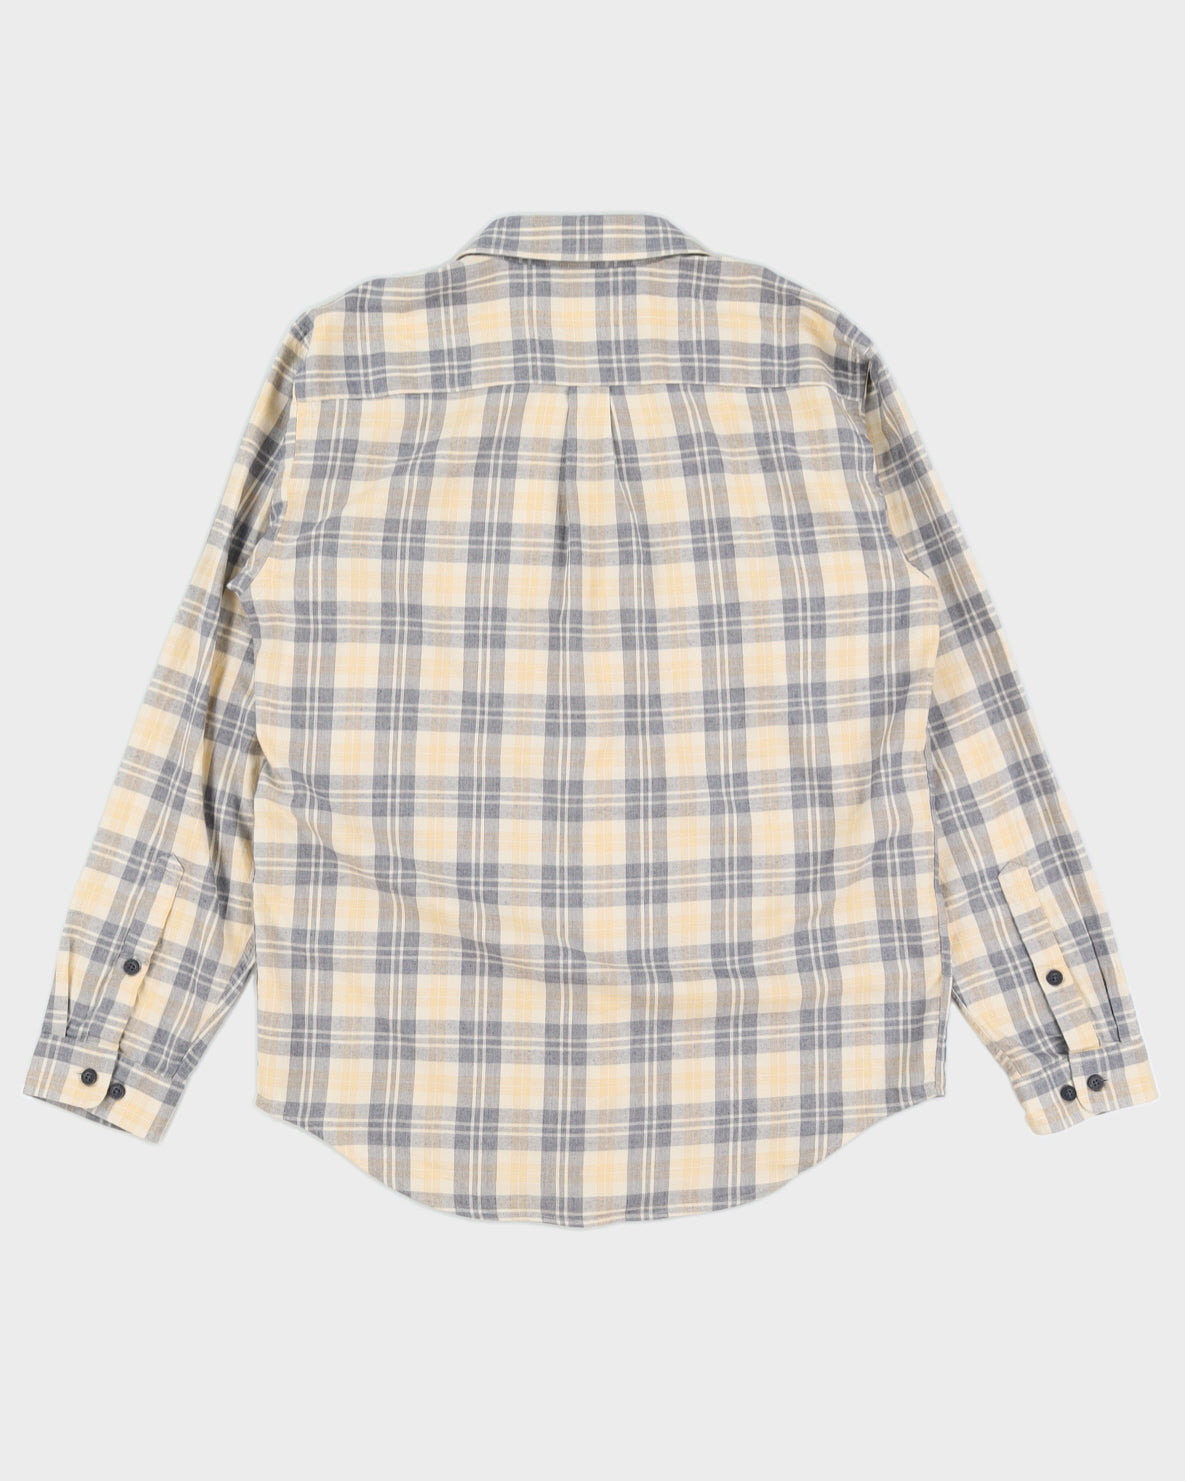 Patagonia Men's Plaid Shirt - L